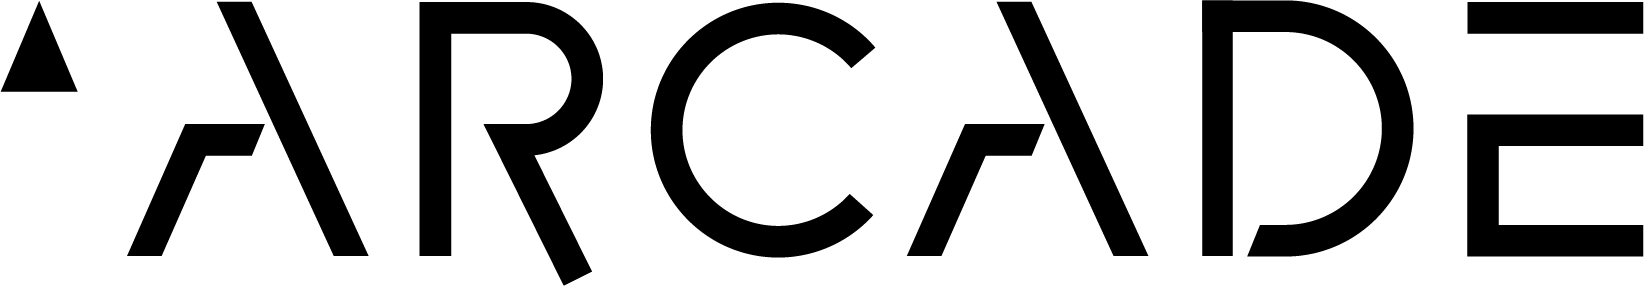 Arcade Belt Logo Png (1644x286)